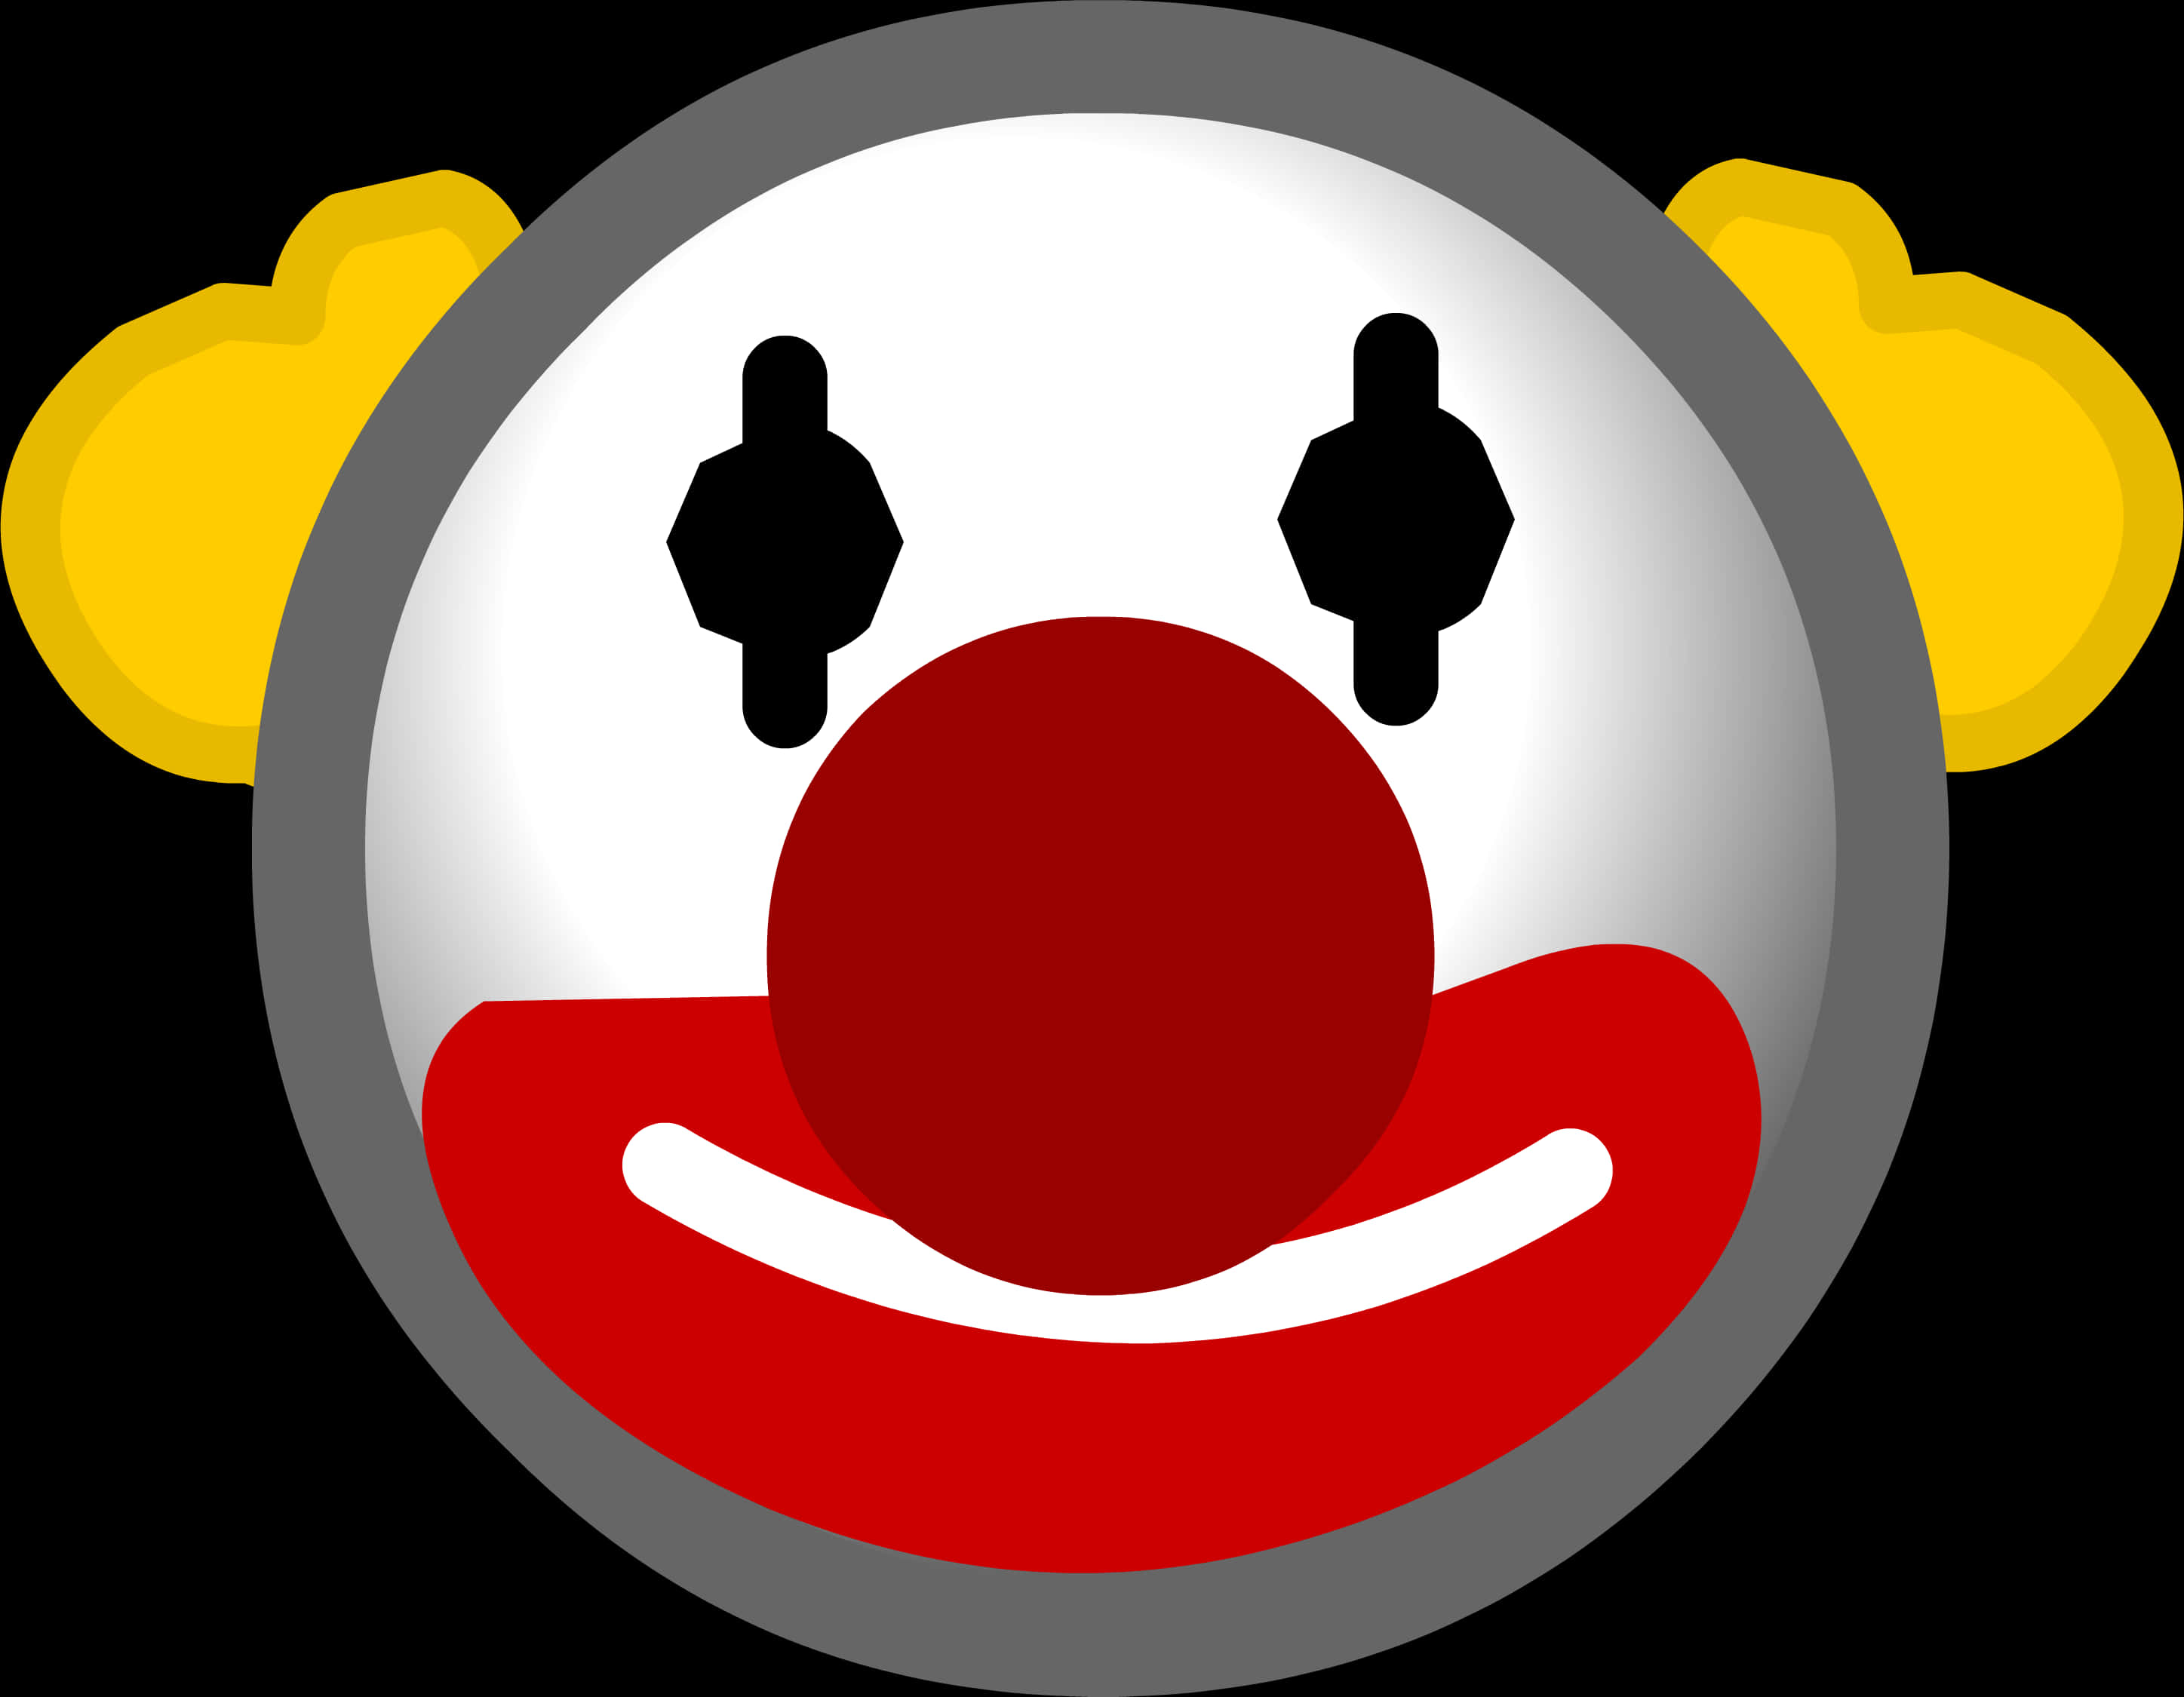 Clown Emoji Graphic PNG